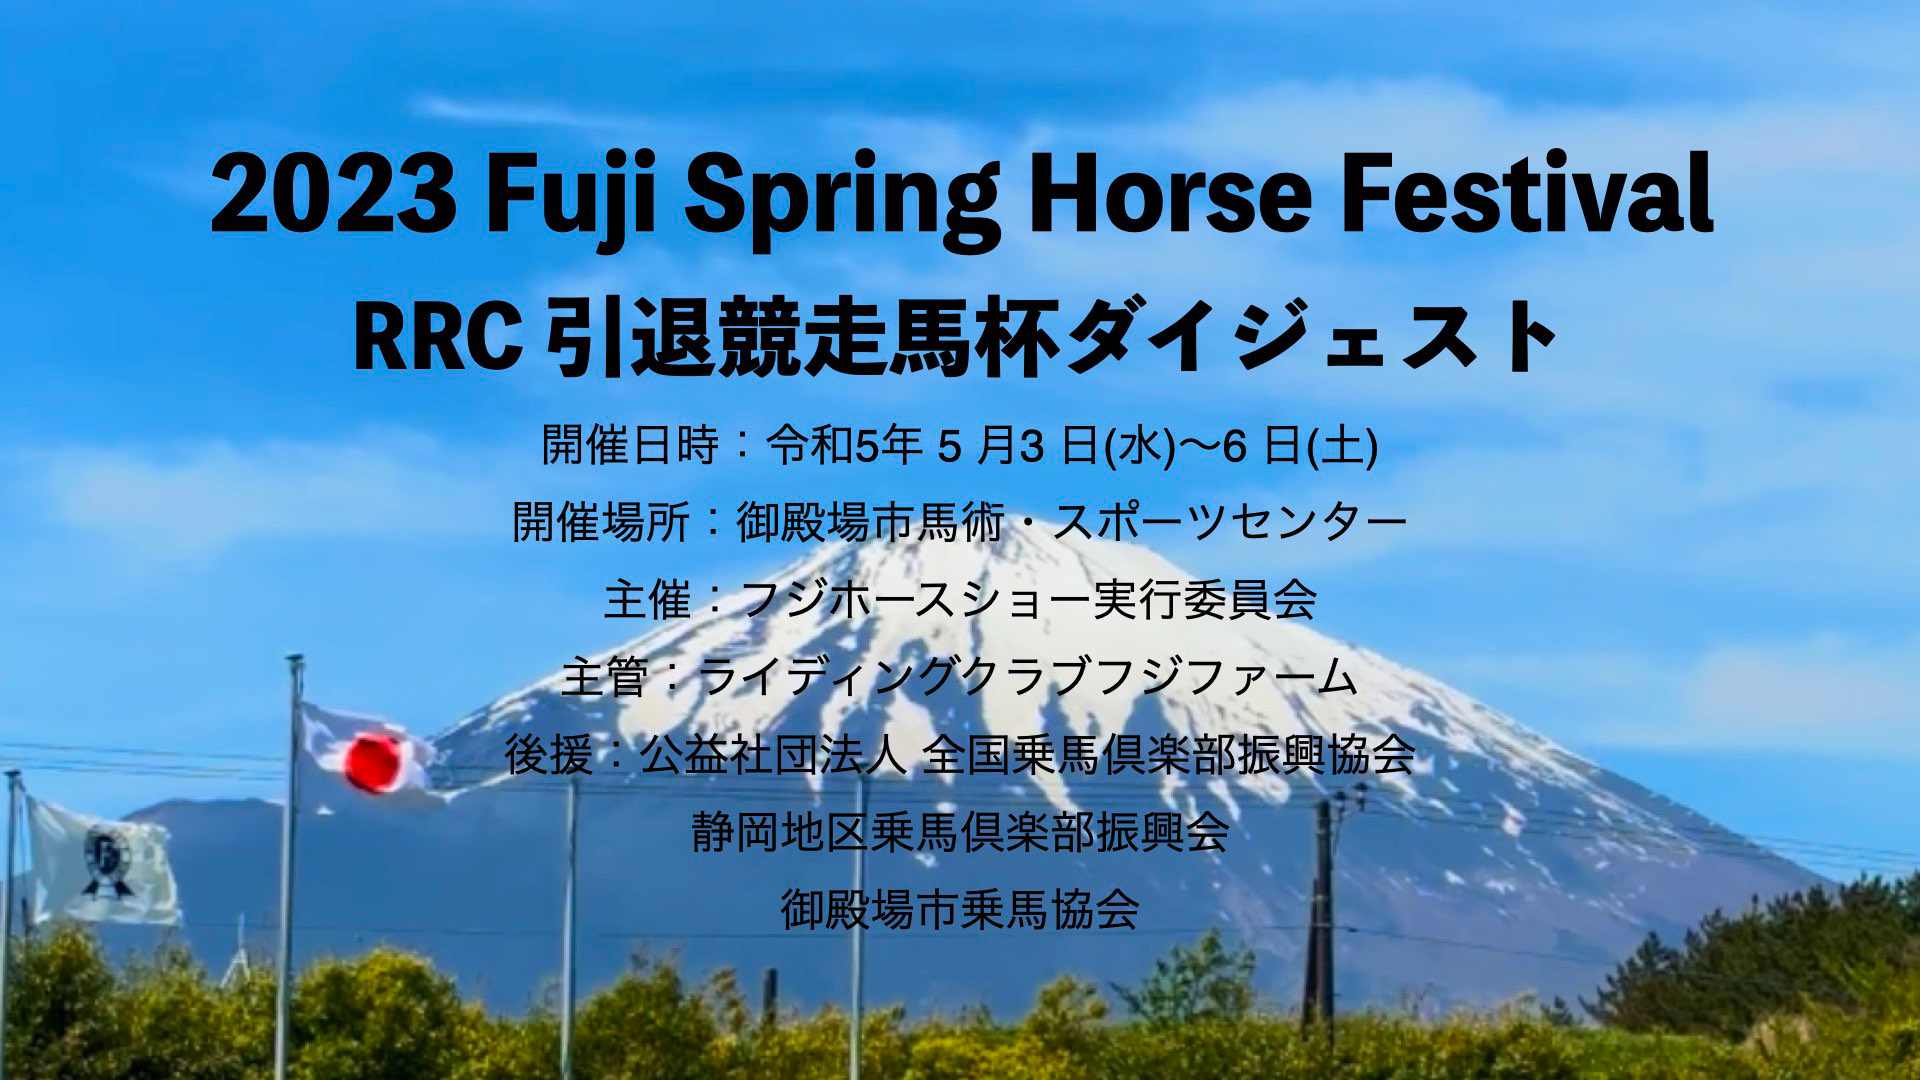 2023 Fuji Spring Horse Festival RRC引退競走馬杯